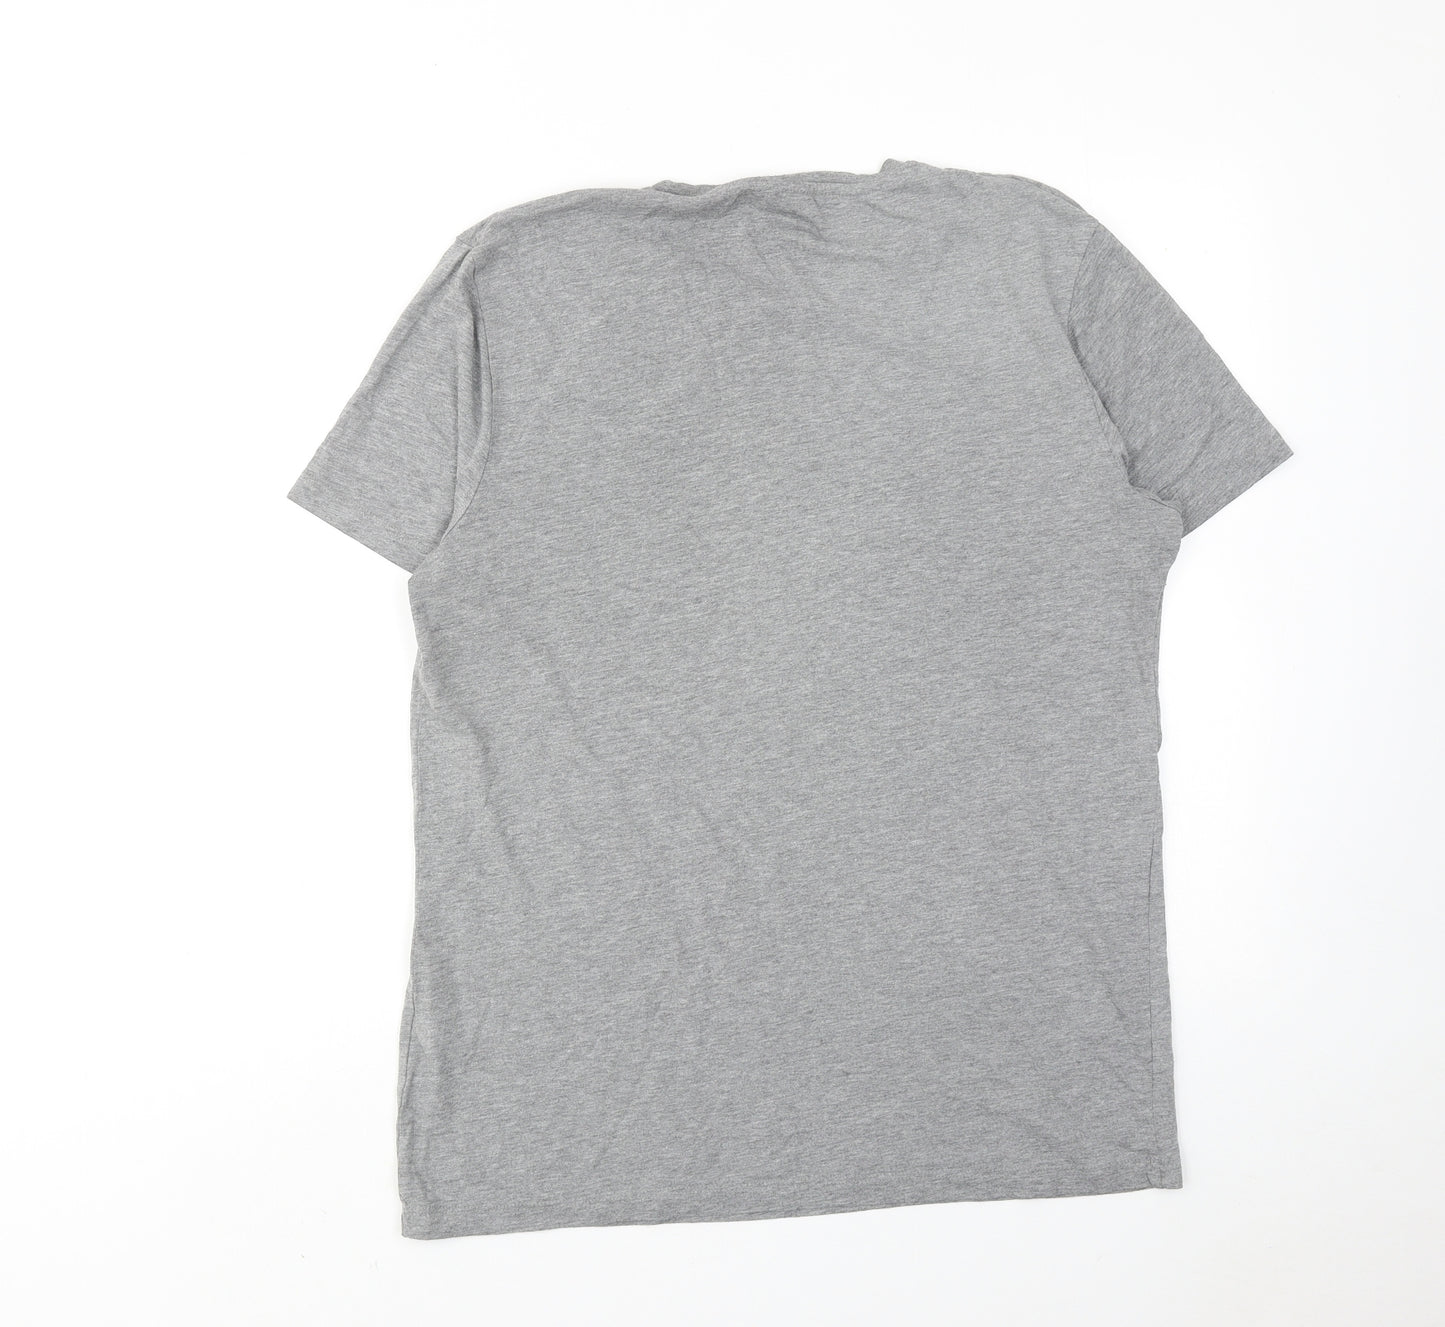 Star Wars Mens Grey Cotton T-Shirt Size L Roll Neck